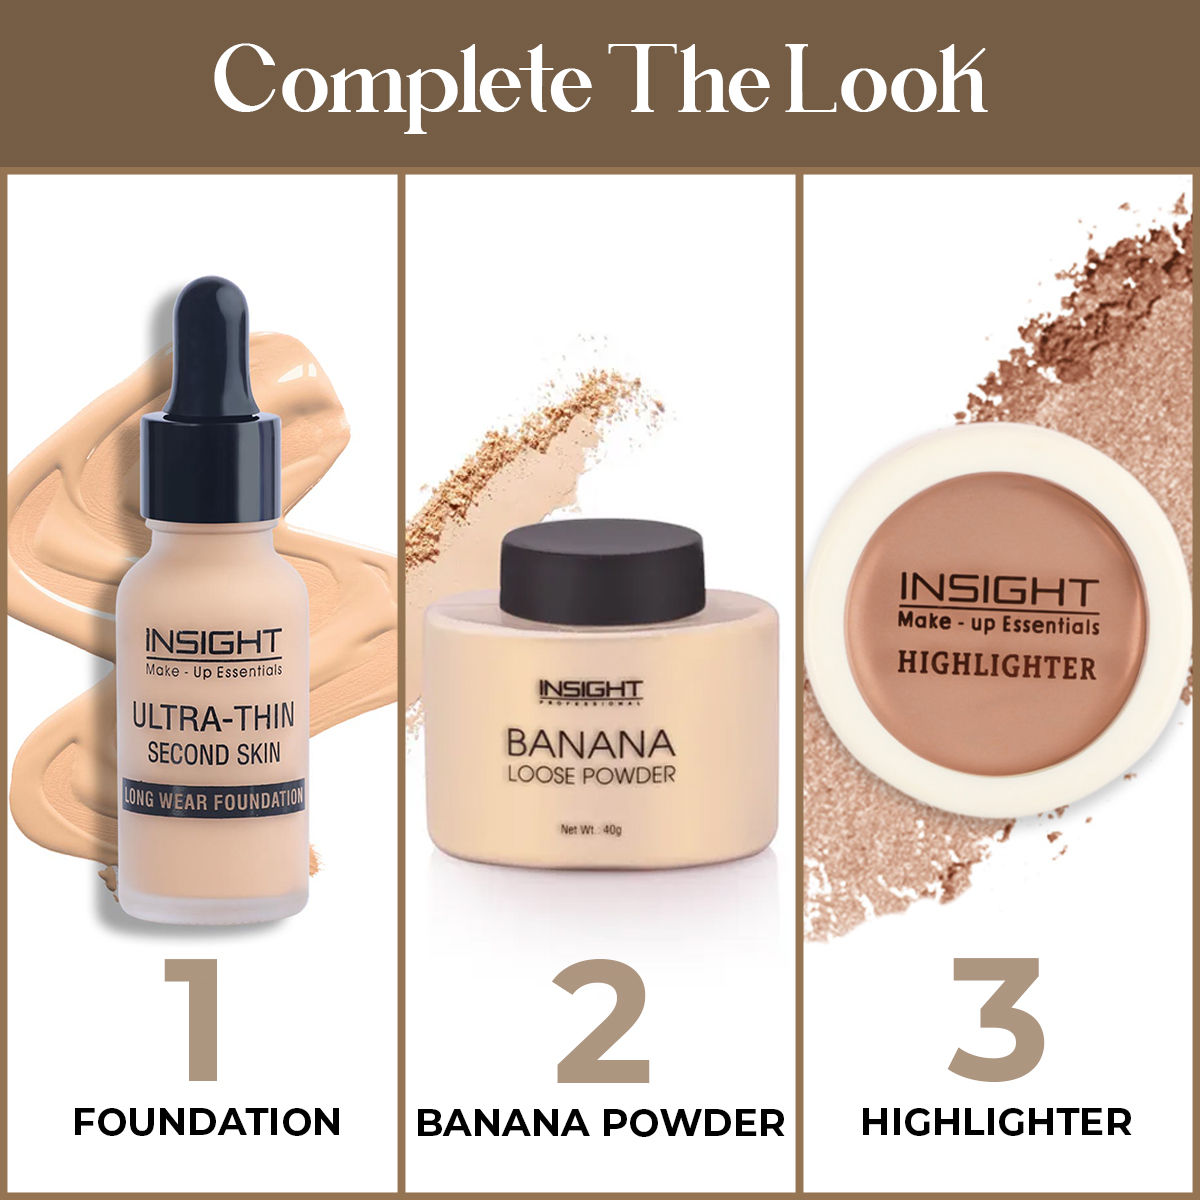 Insight Cosmetics Banana Loose Powder (40gm)